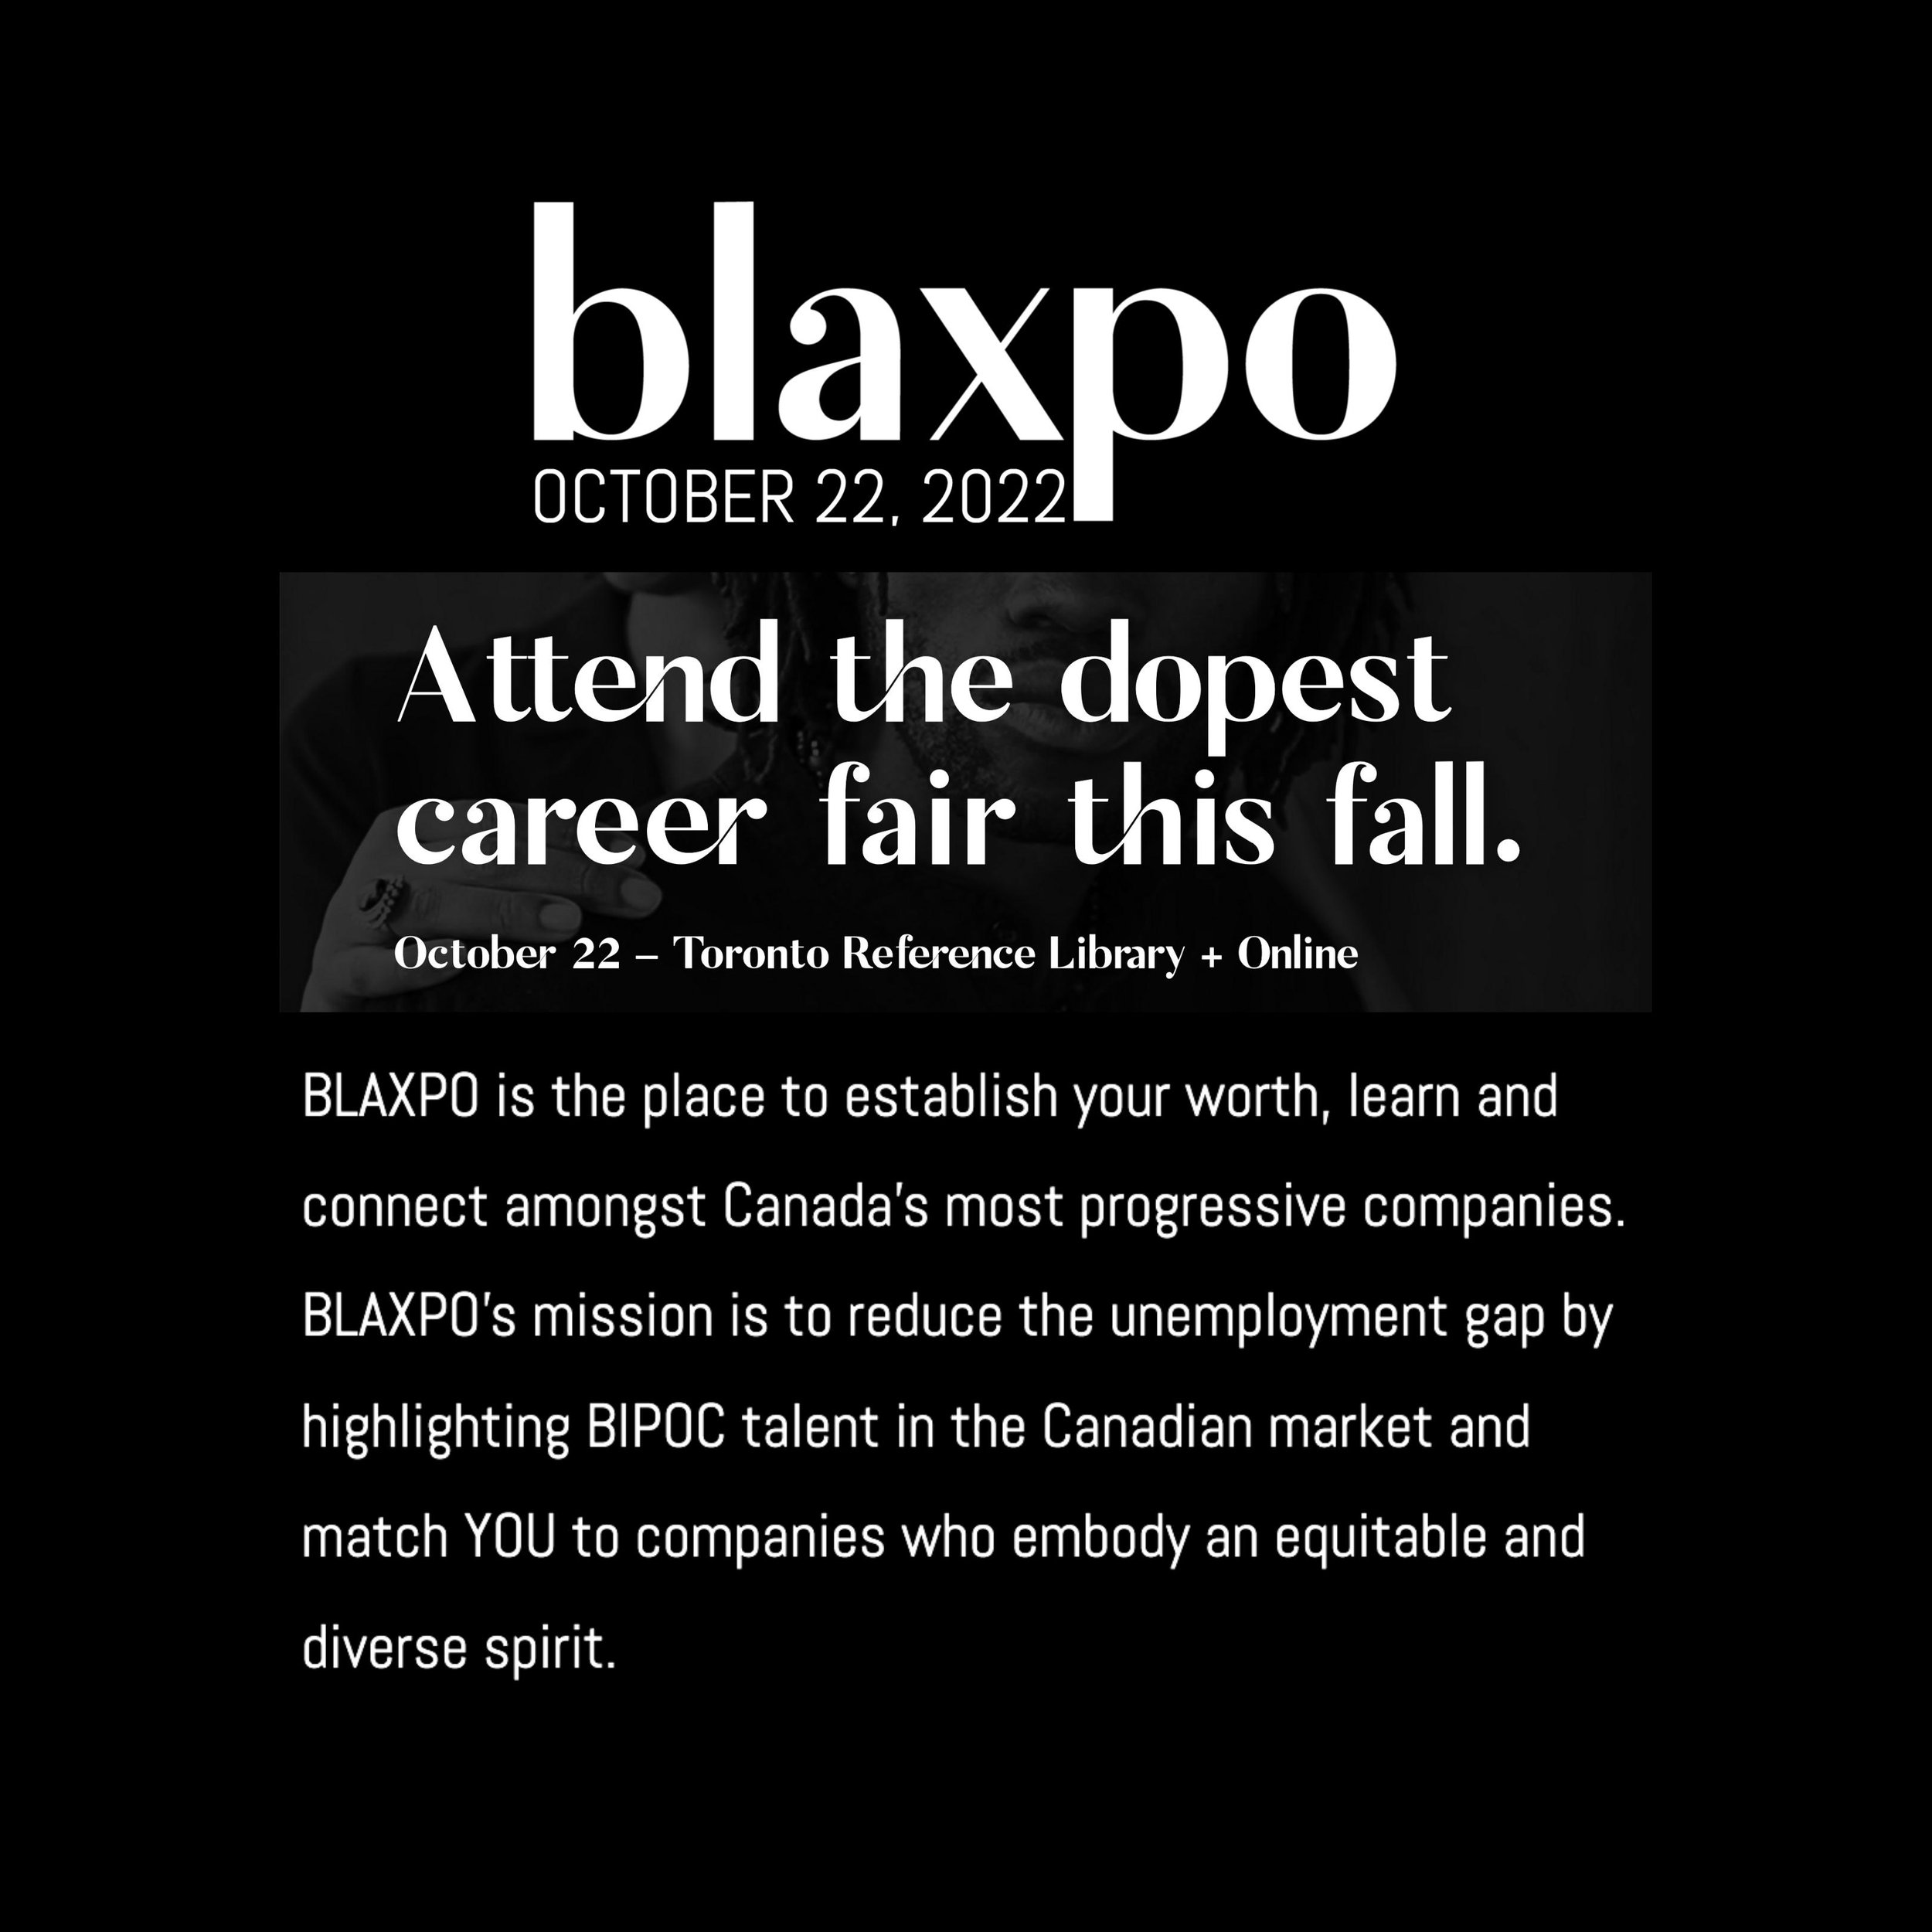 BLAXPO Job Fair